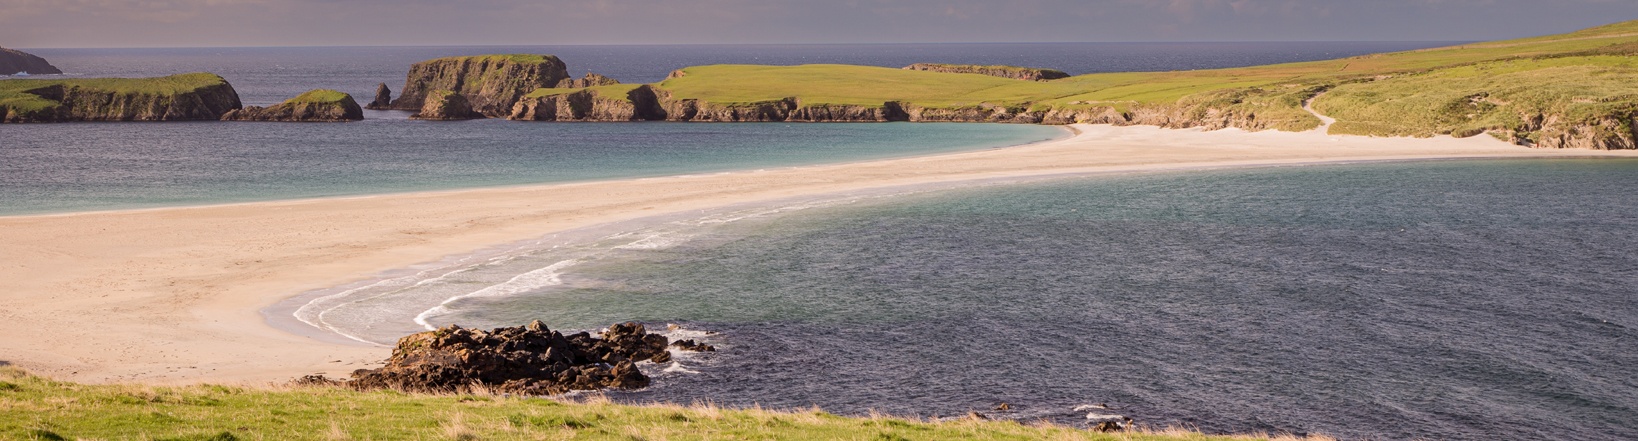 St ninians bay - Shetland